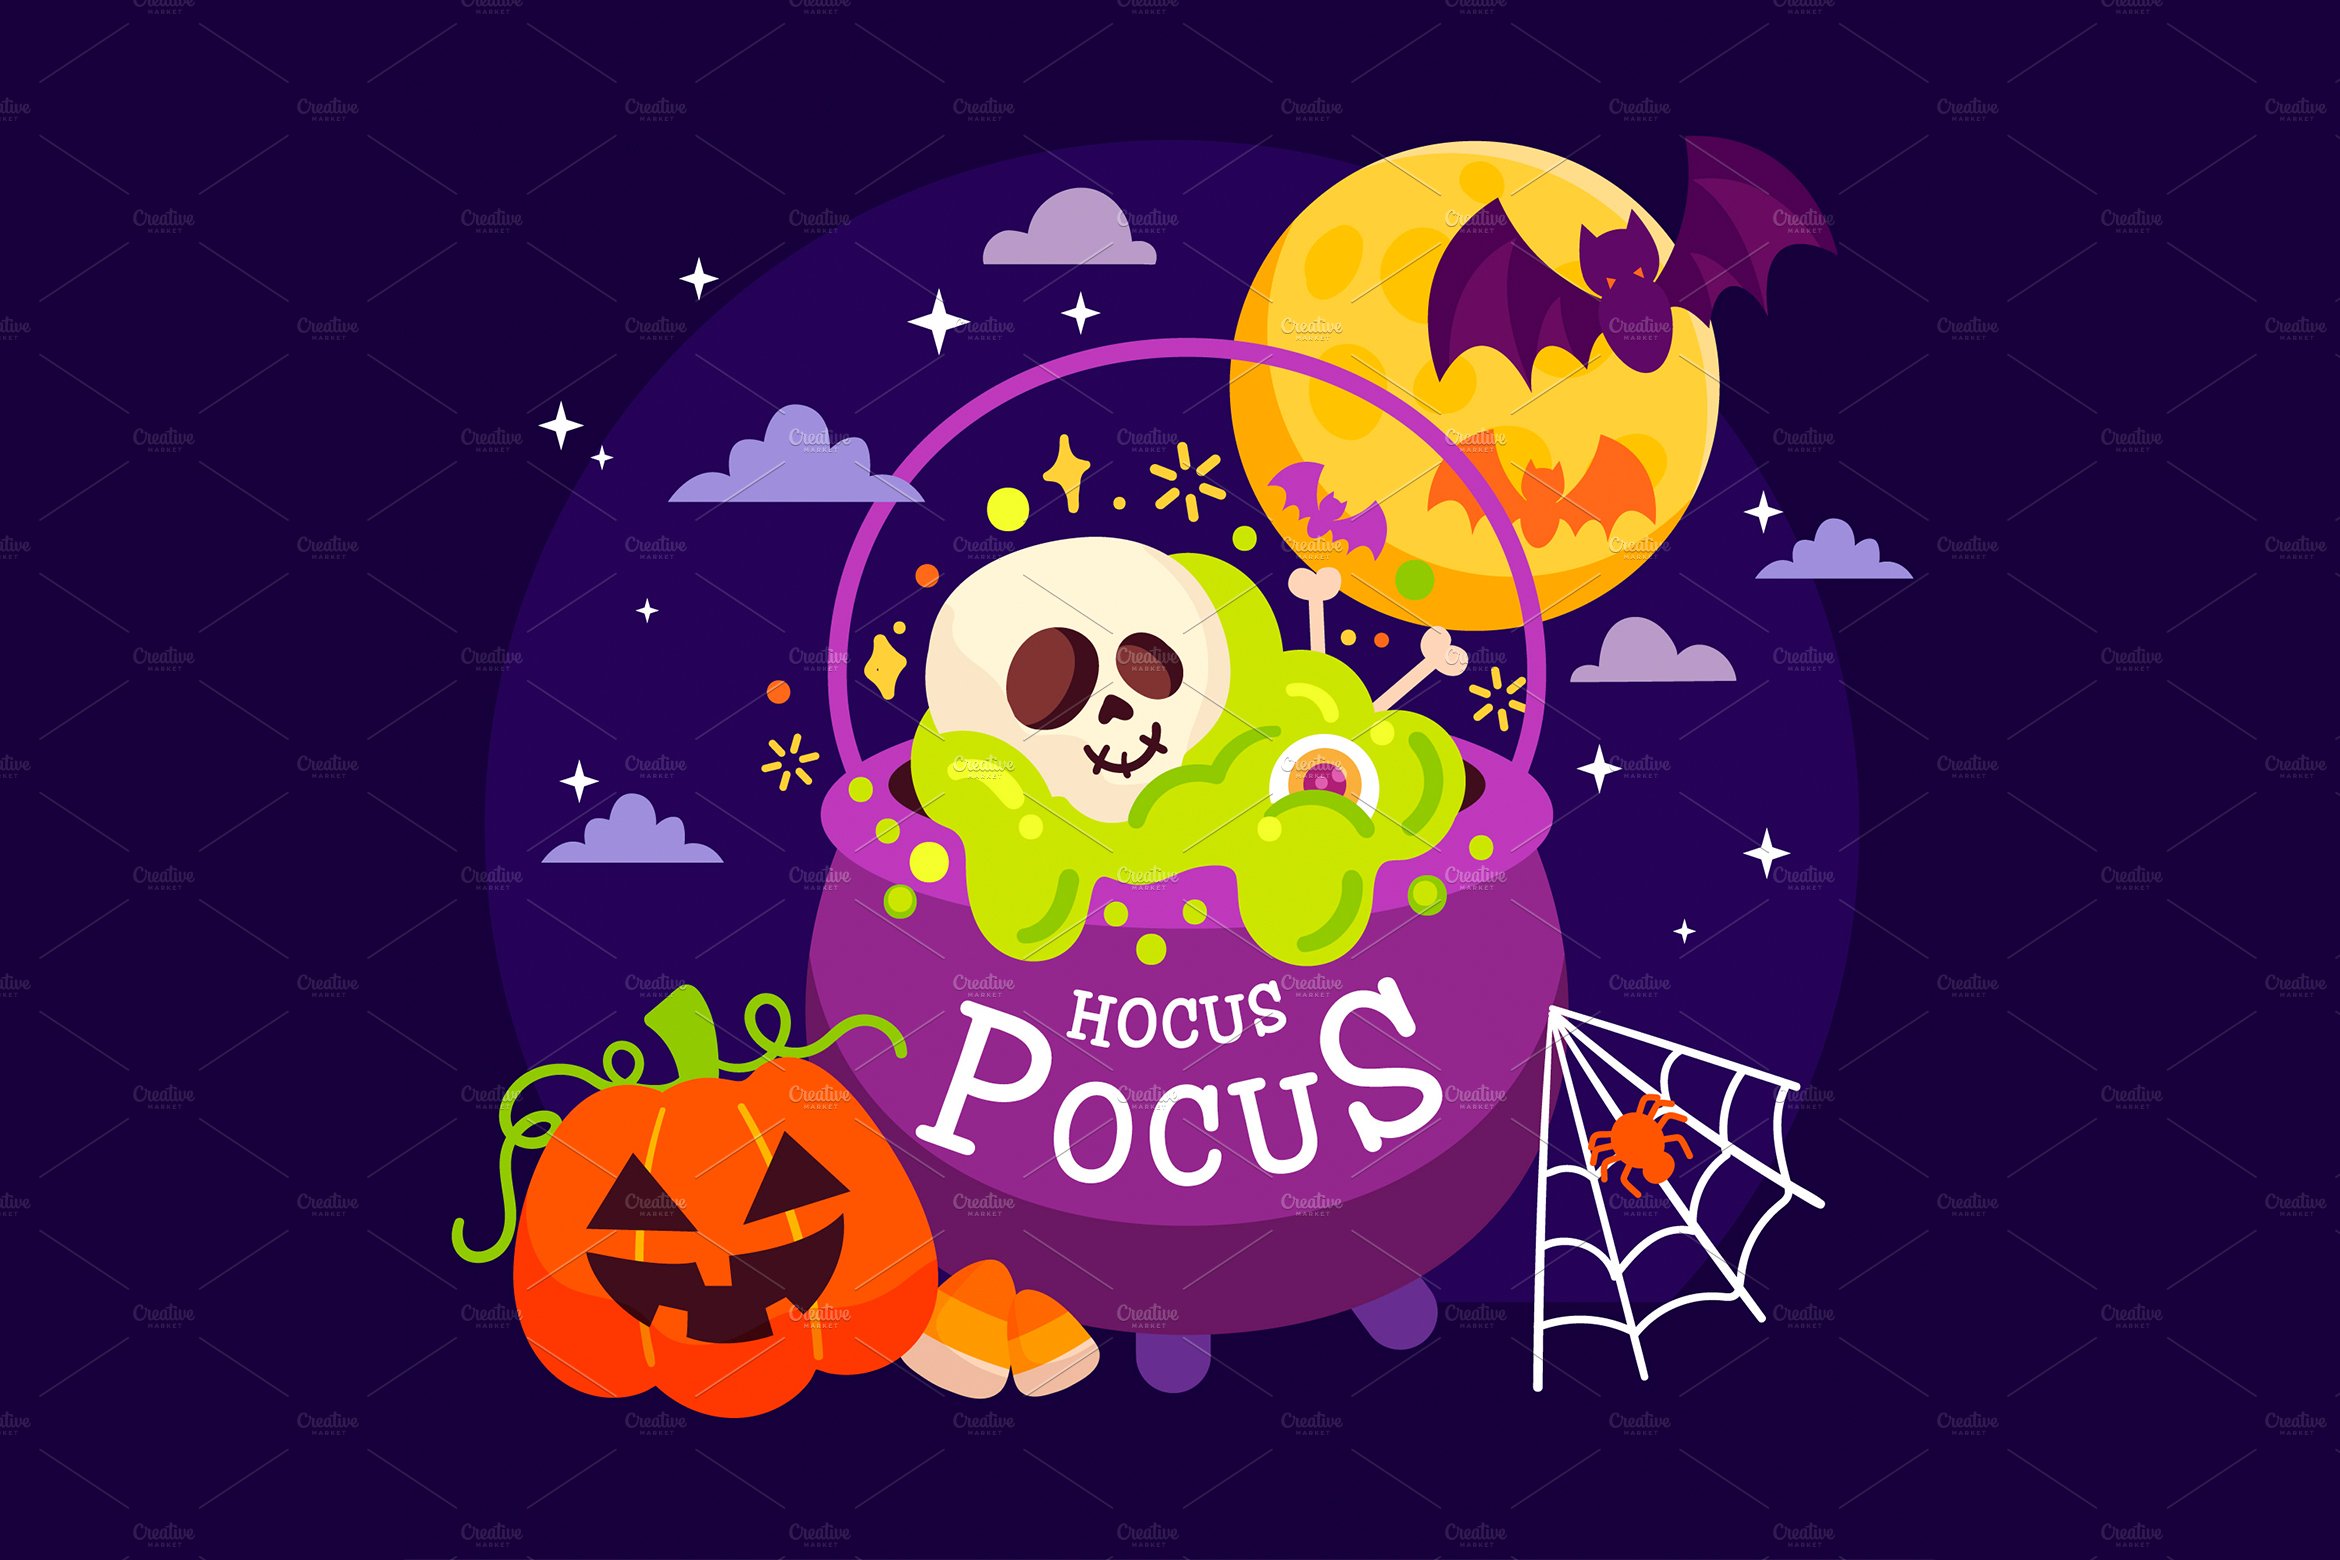 Hocus Pocus Halloween cover image.